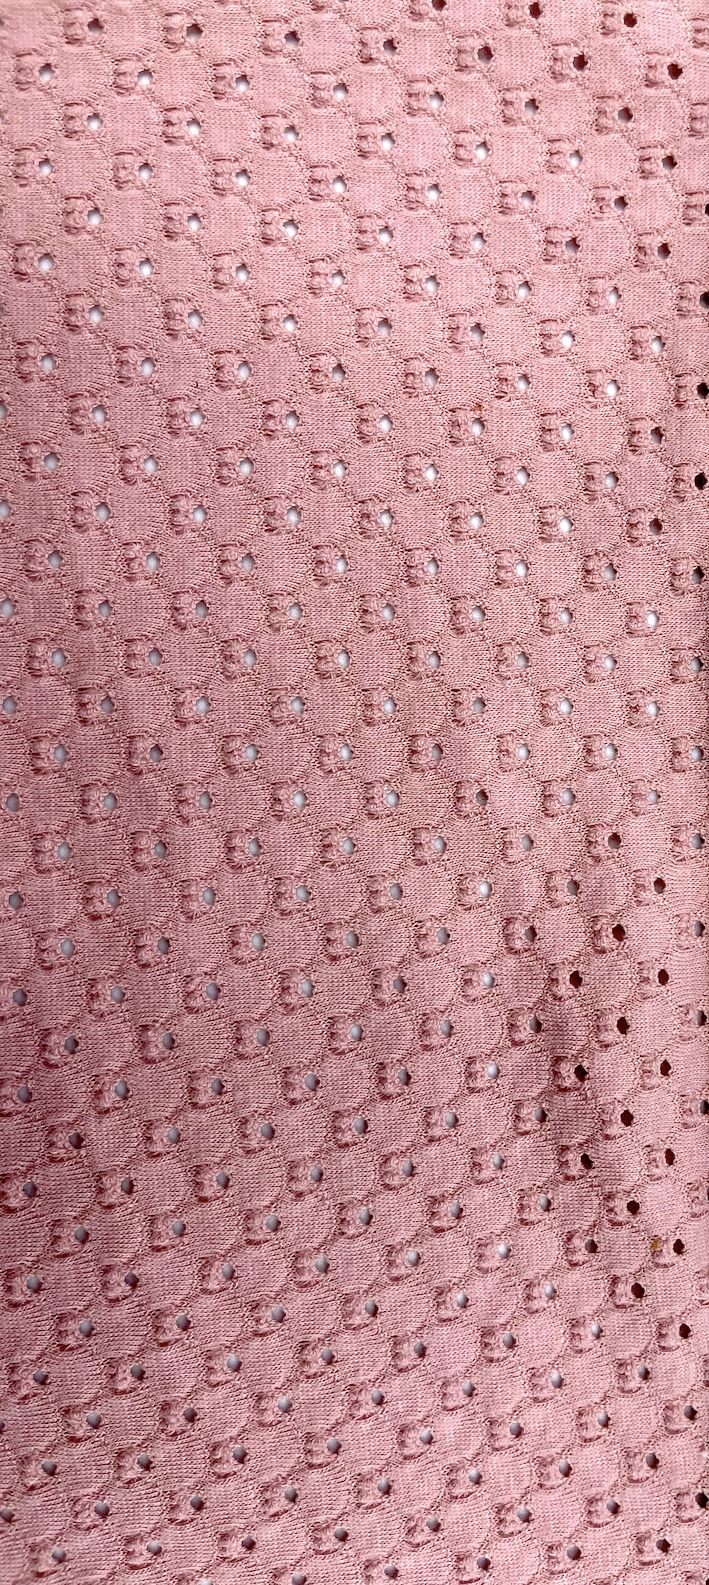 66% polyester 33% katoen 1% spandex jersey stof